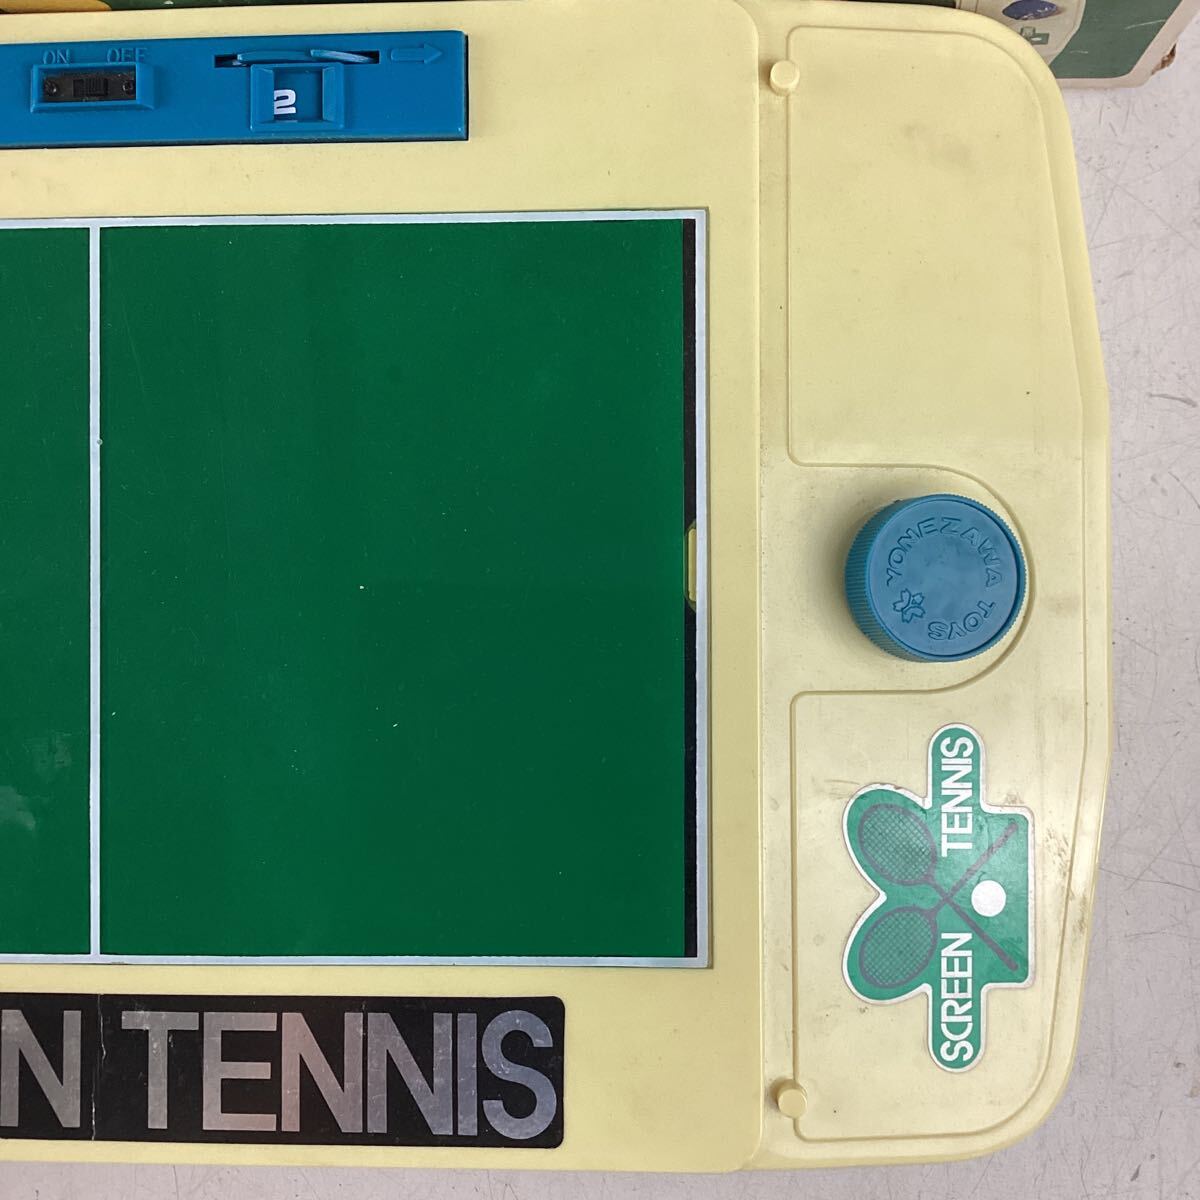 k529 экран теннис Ёнэдзава игрушка Showa Retro SCREEN TENNIS настольная игра игра игрушка игрушка б/у Junk 